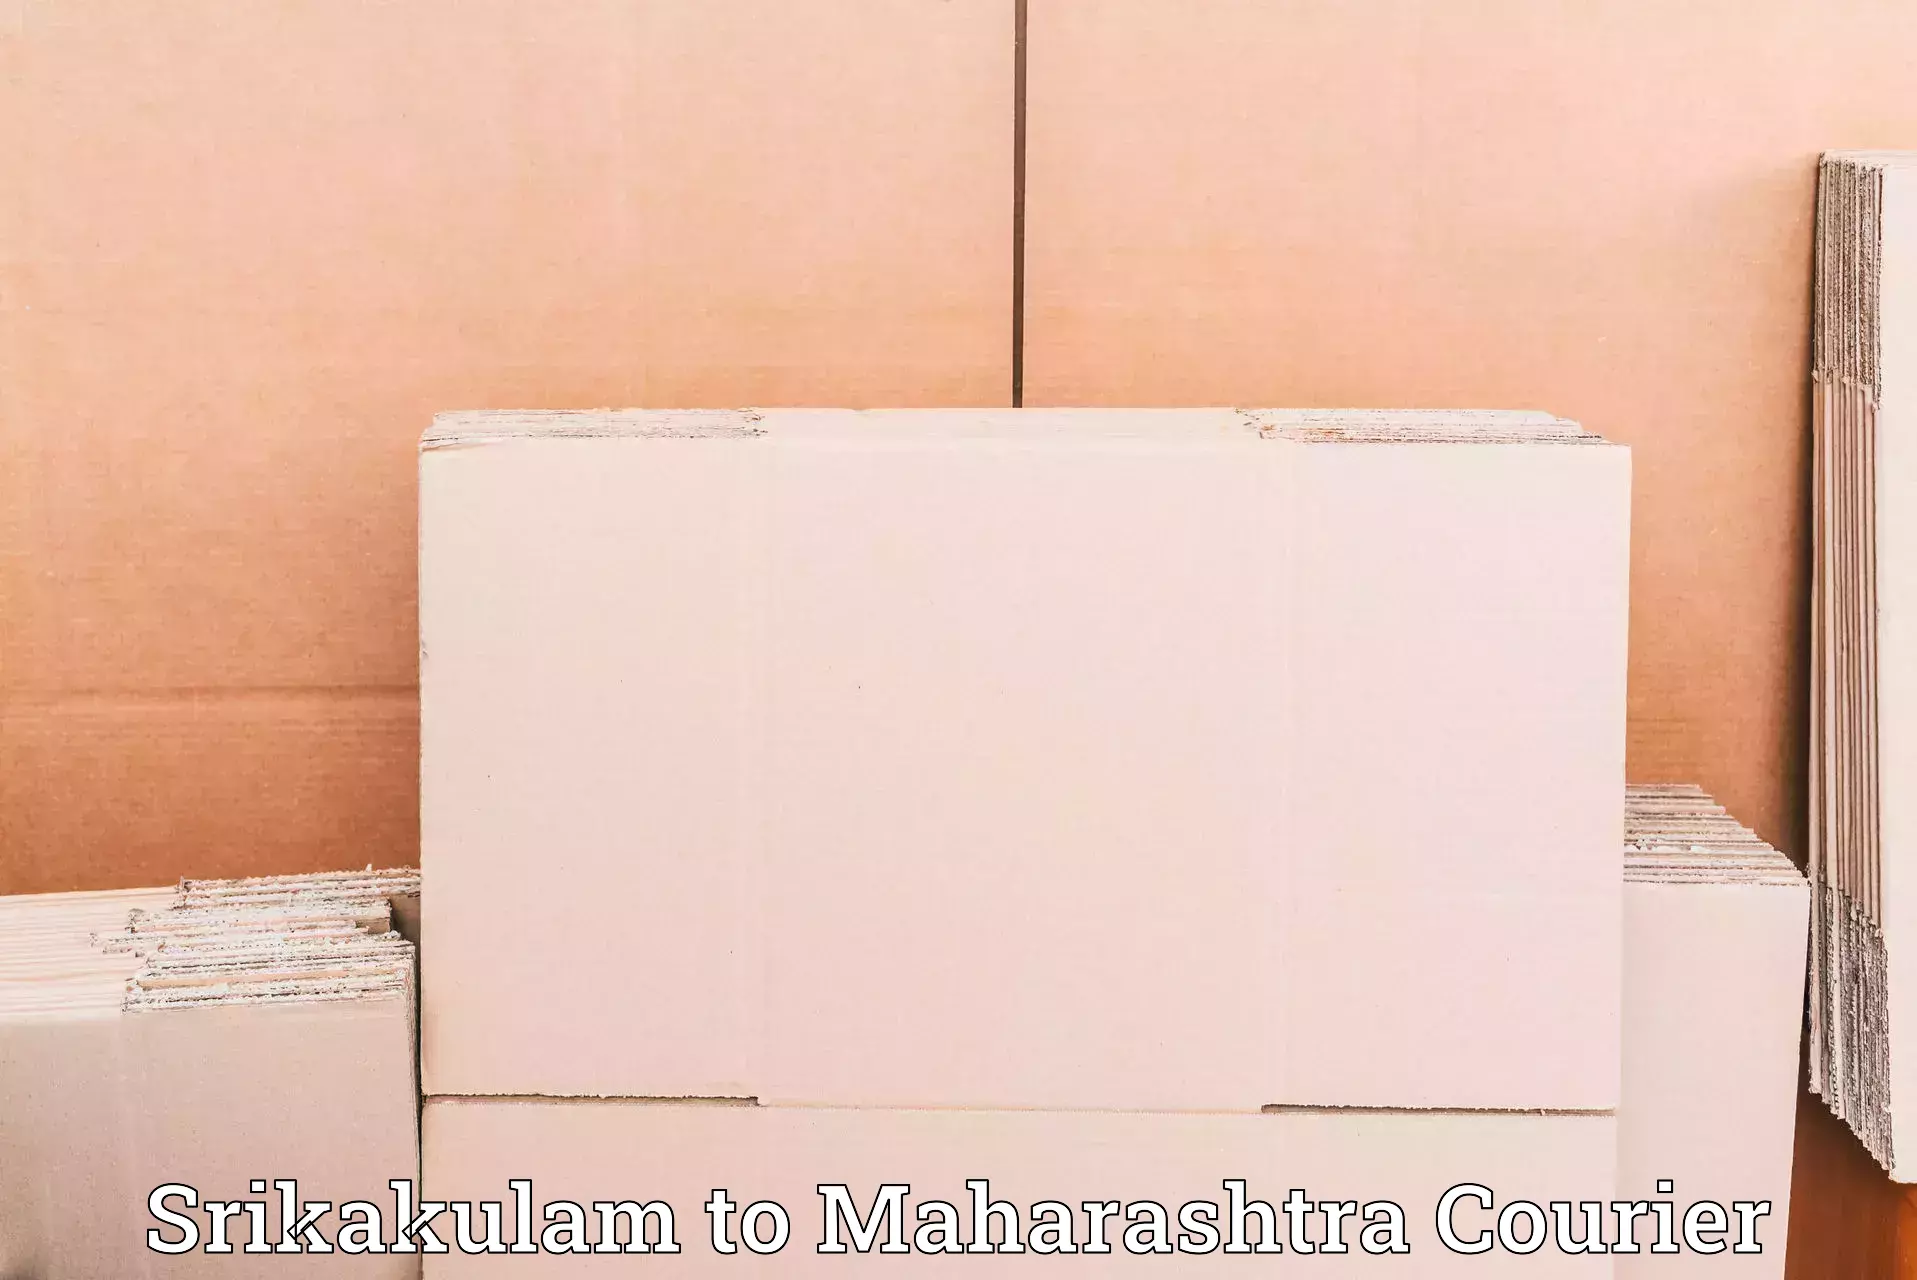 Courier service innovation Srikakulam to Raigarh Maharashtra